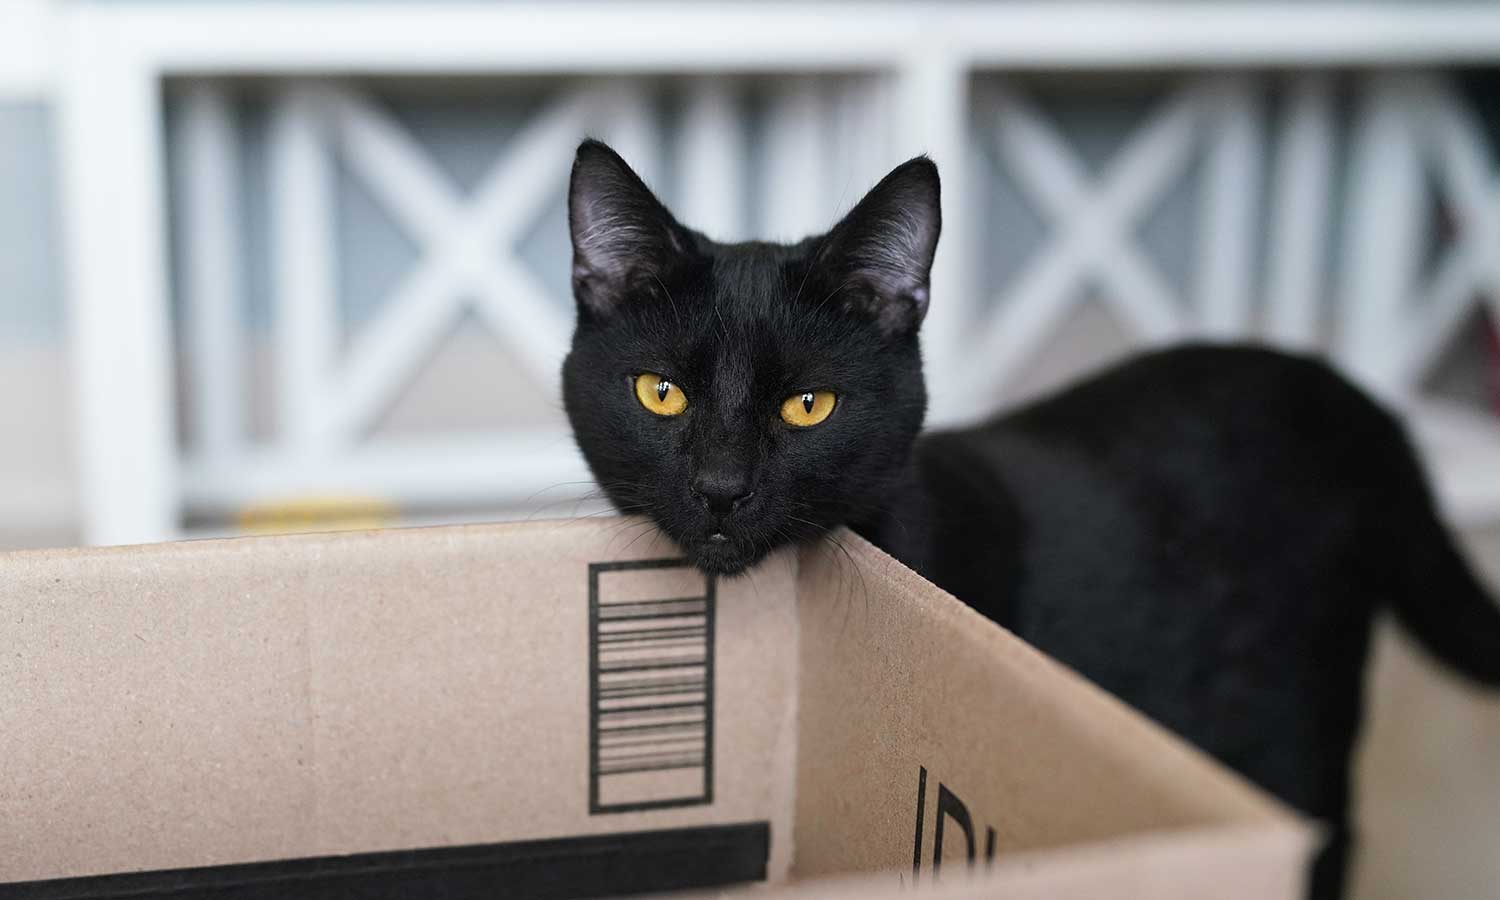 A black cat rubbing on a box